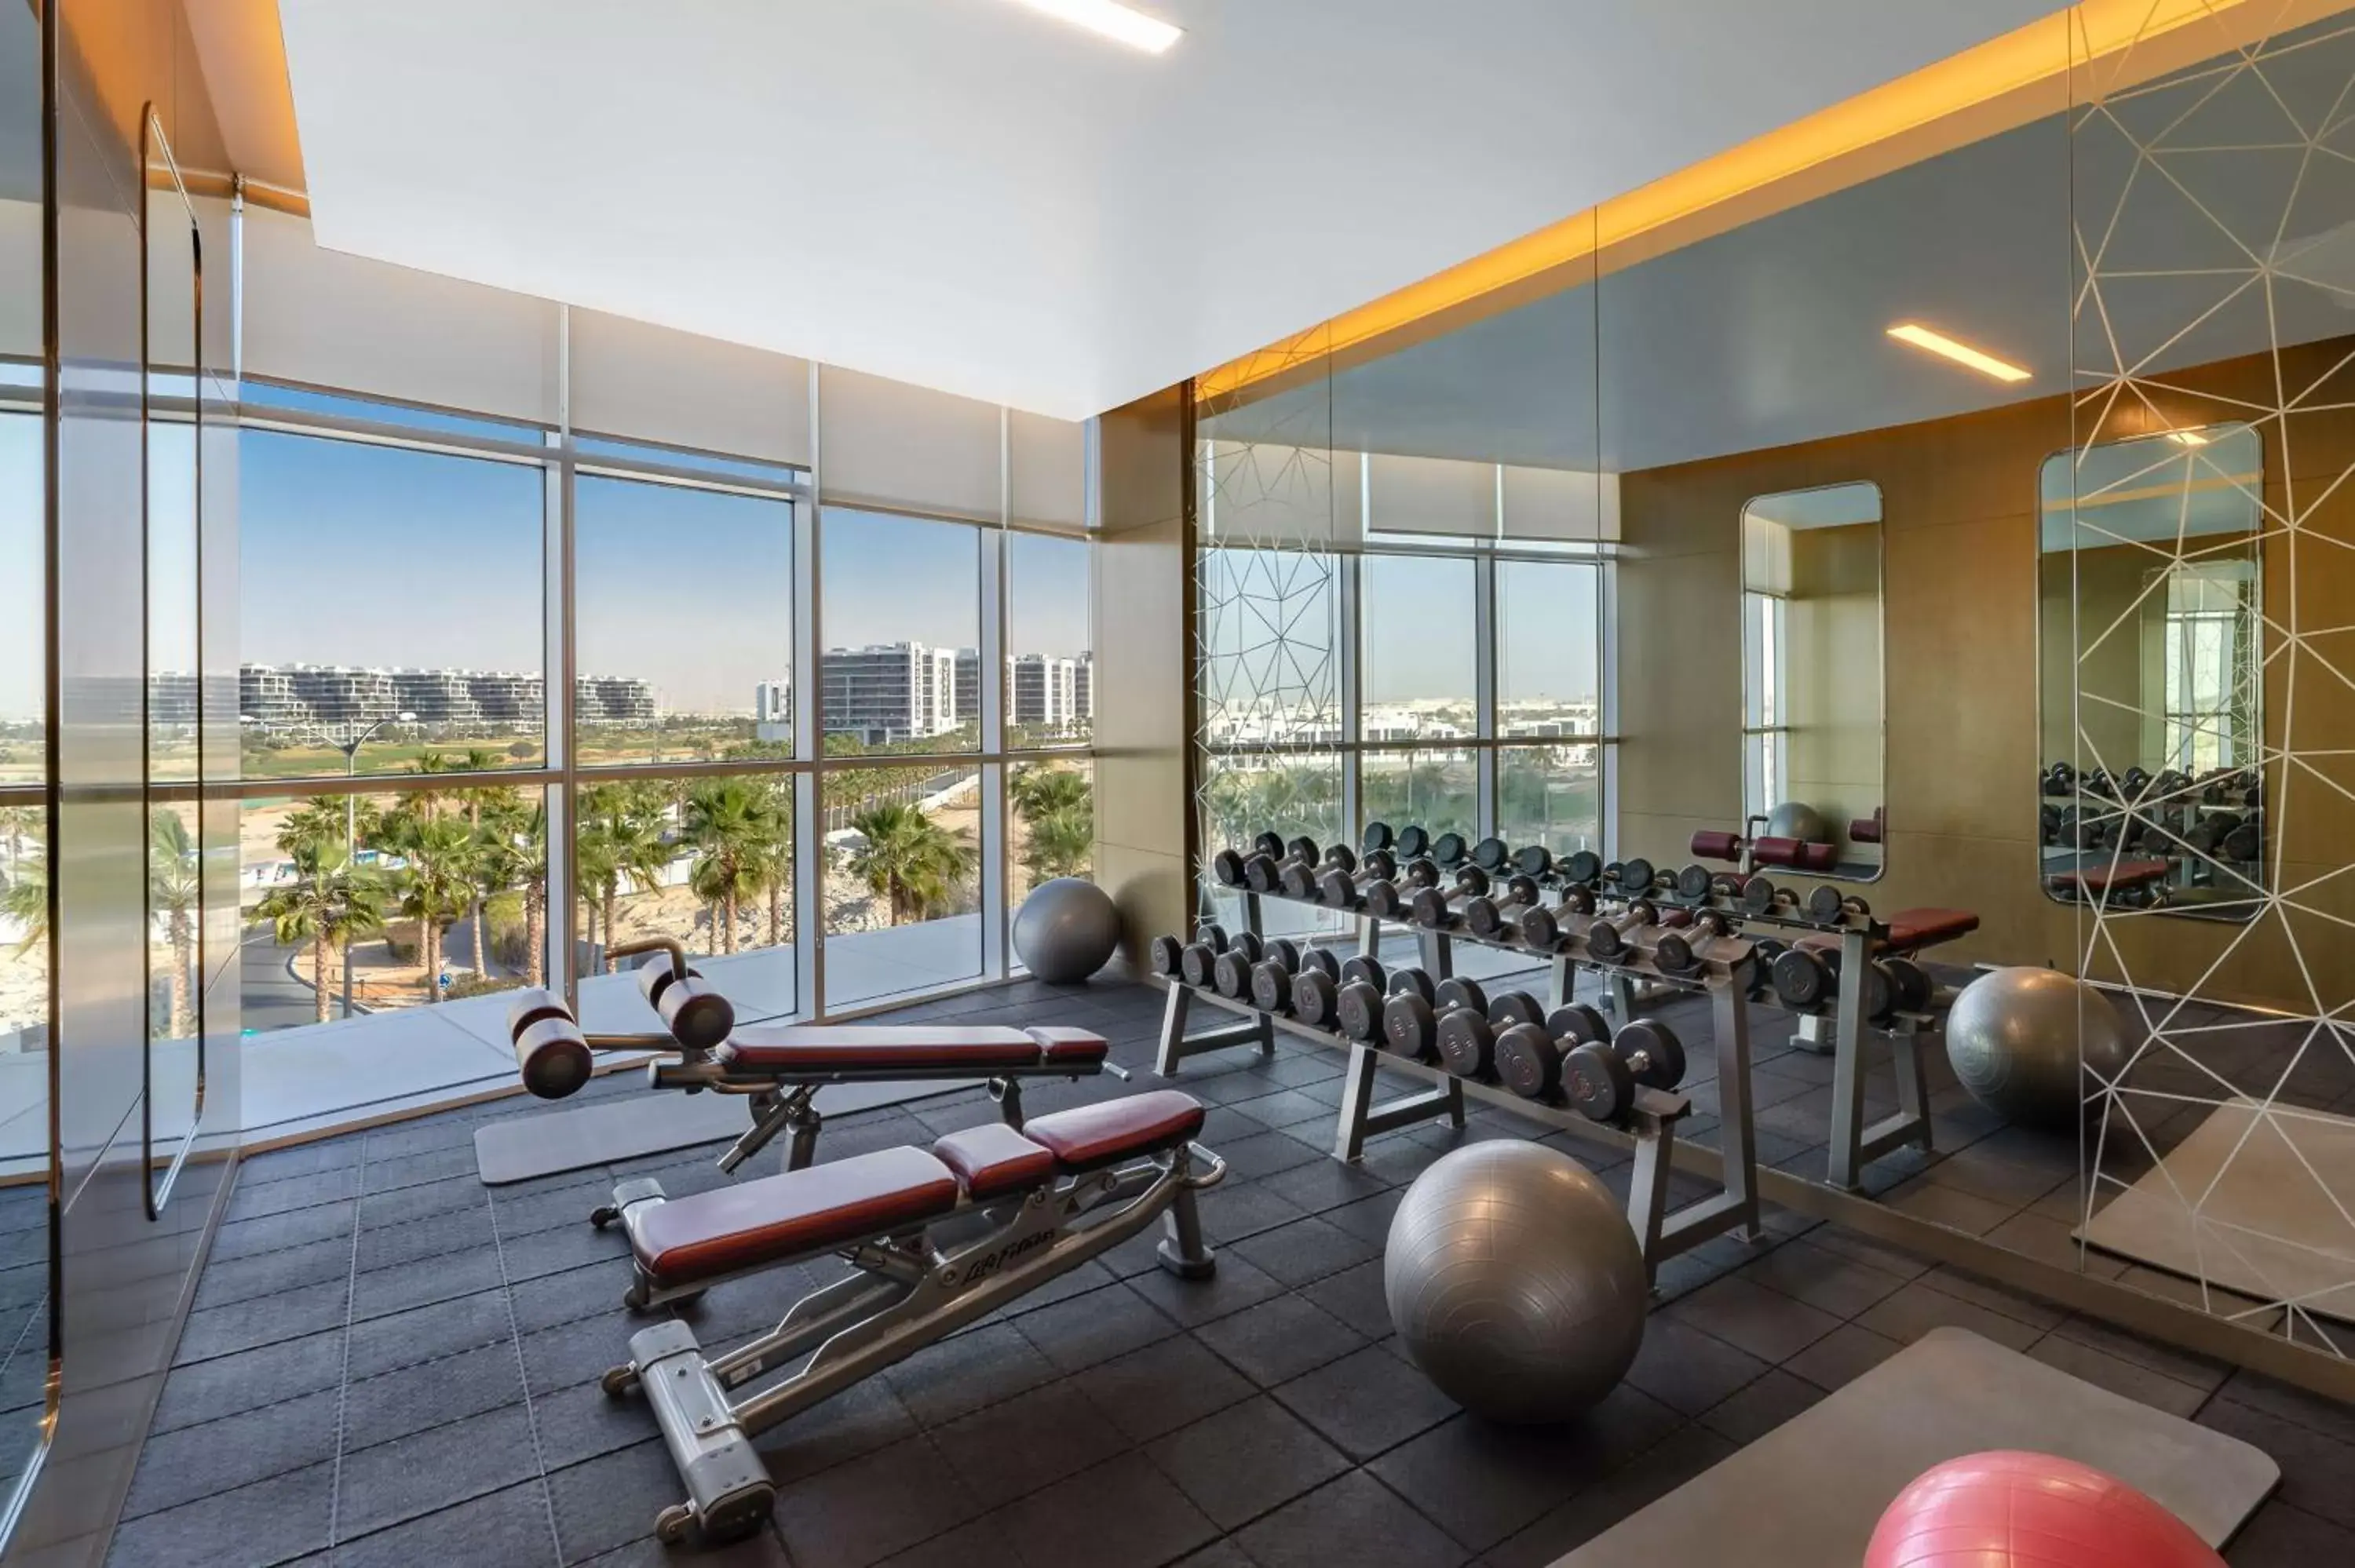 Fitness centre/facilities, Fitness Center/Facilities in Radisson Dubai Damac Hills